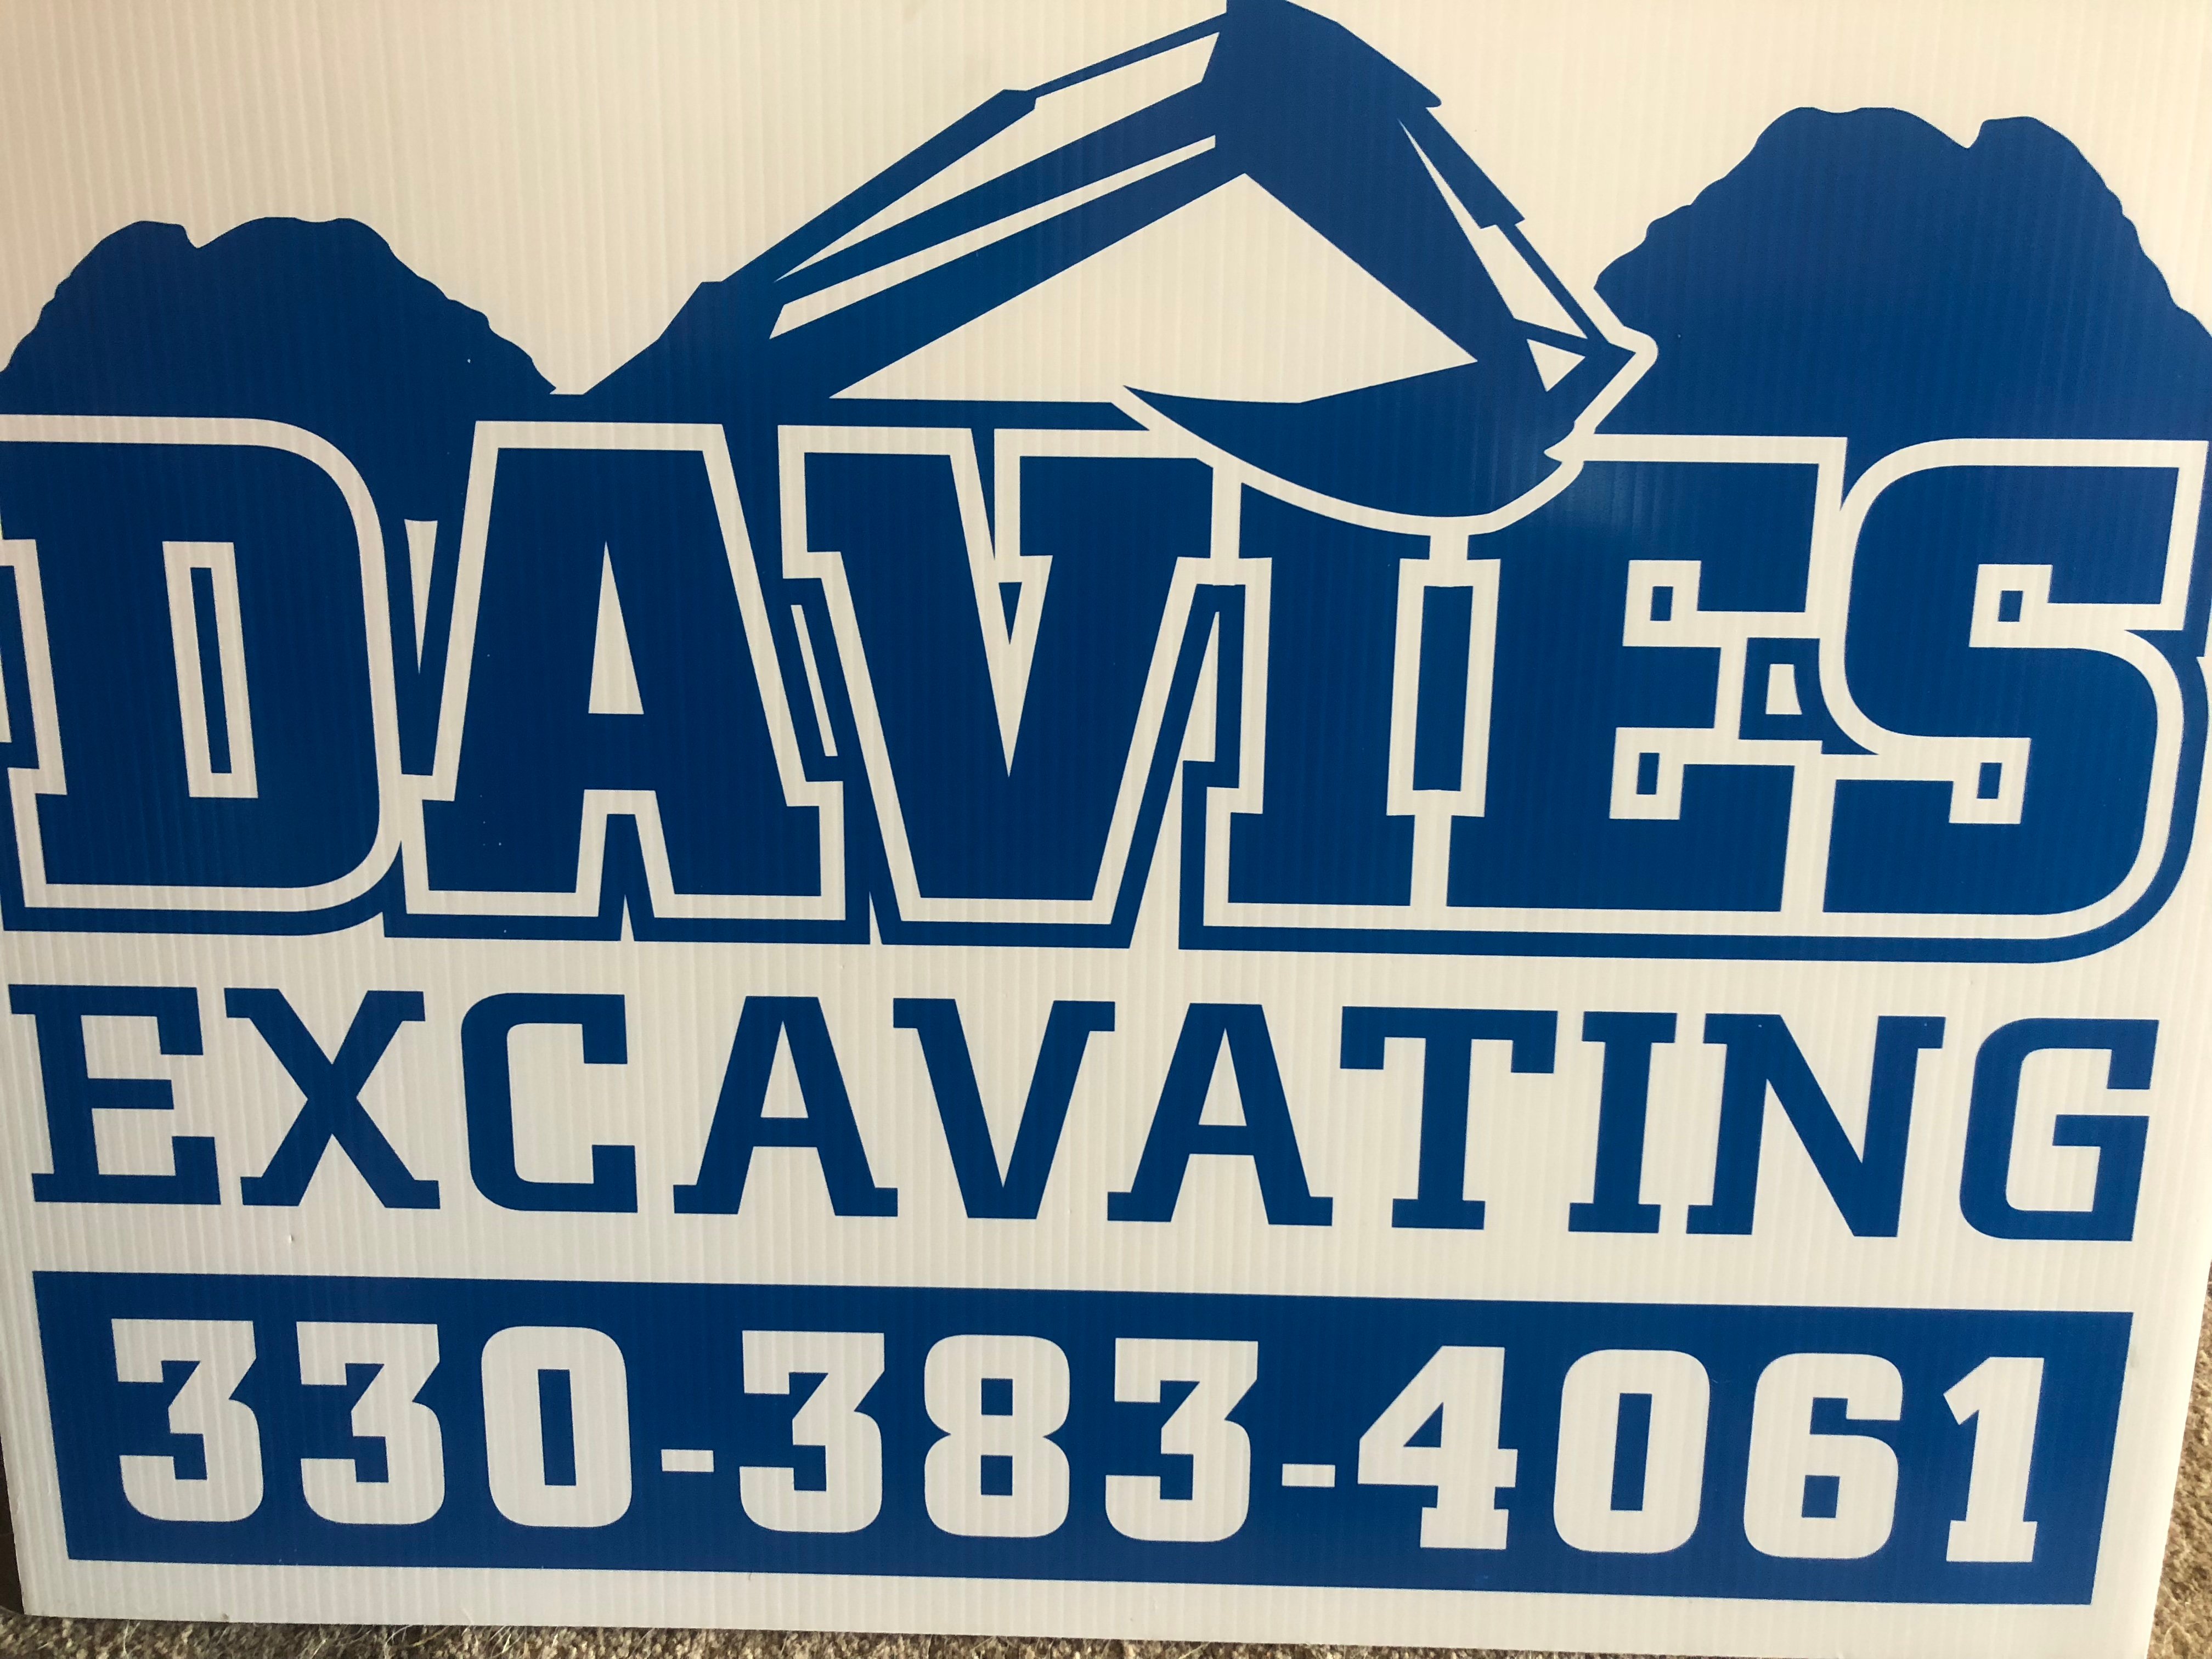 Davies Excavating Logo